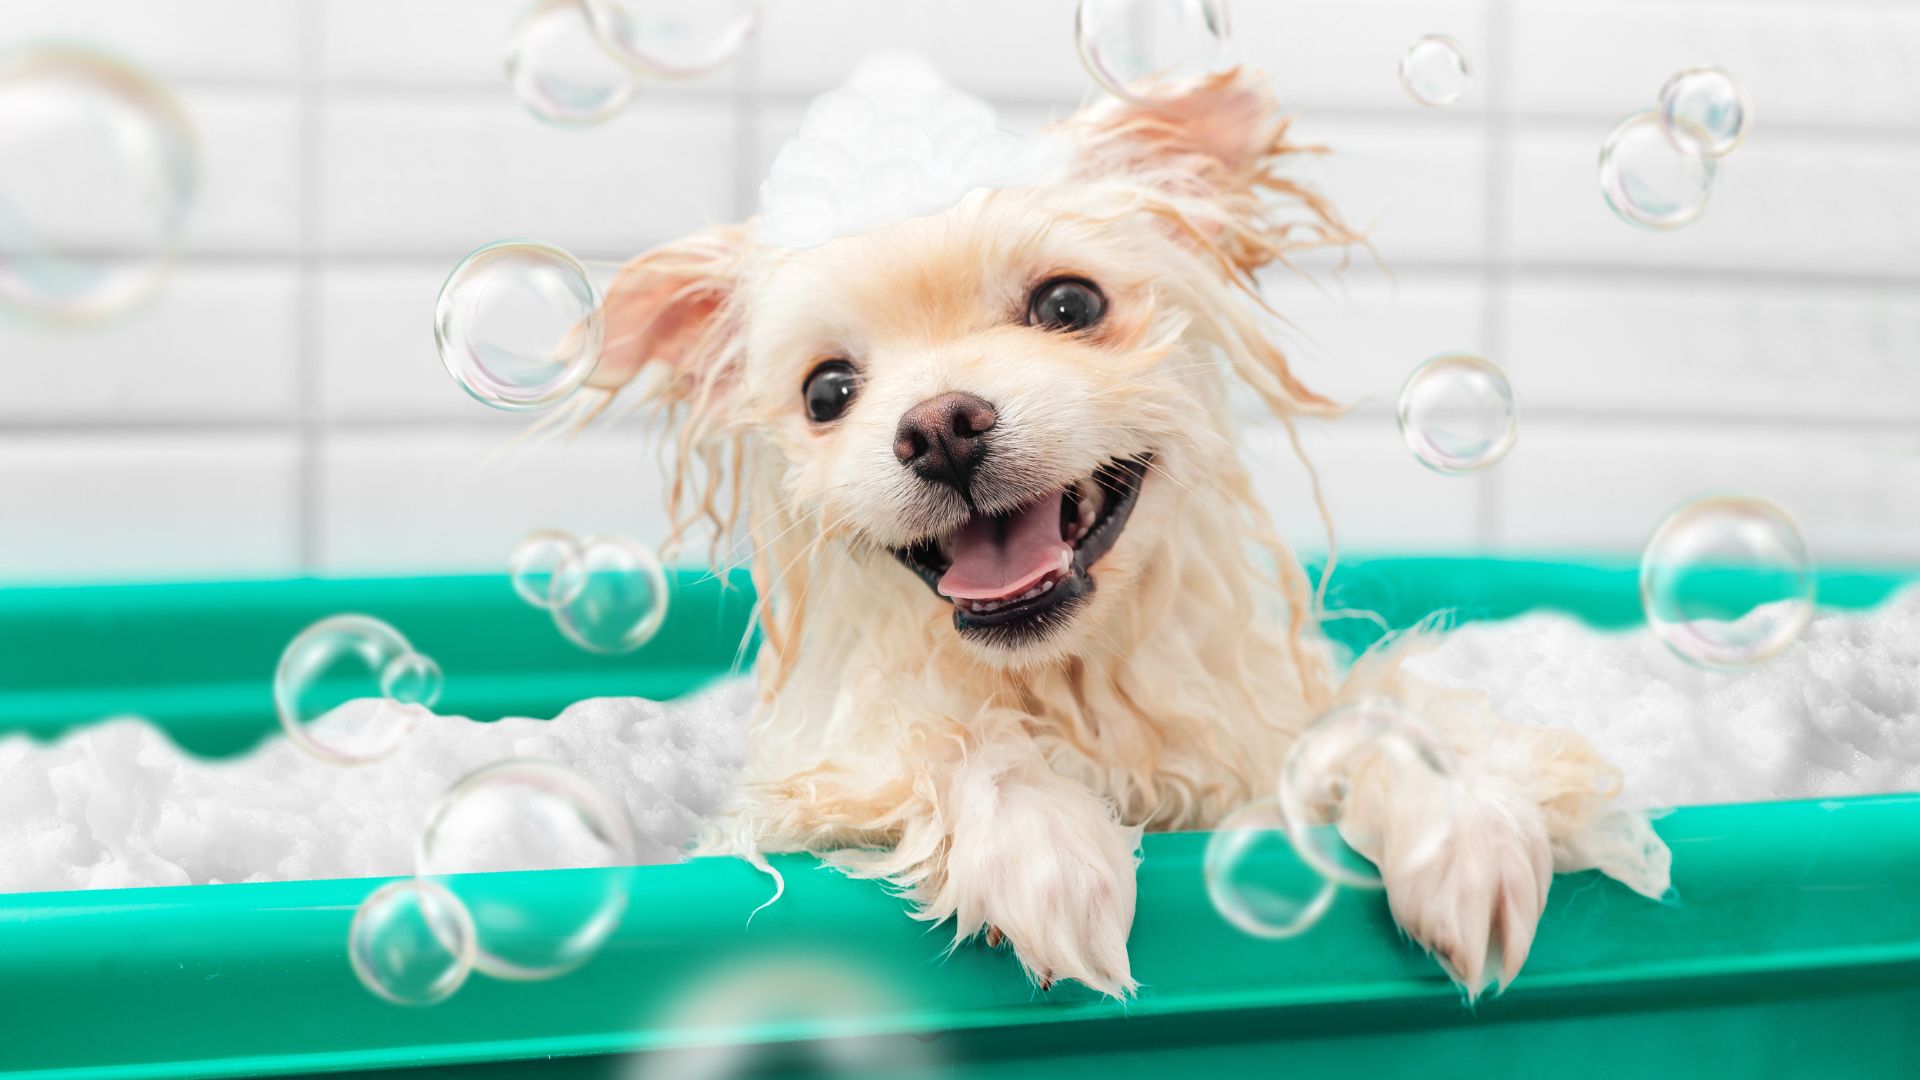 pomeranian spitz is showering with shampoo in dog bath